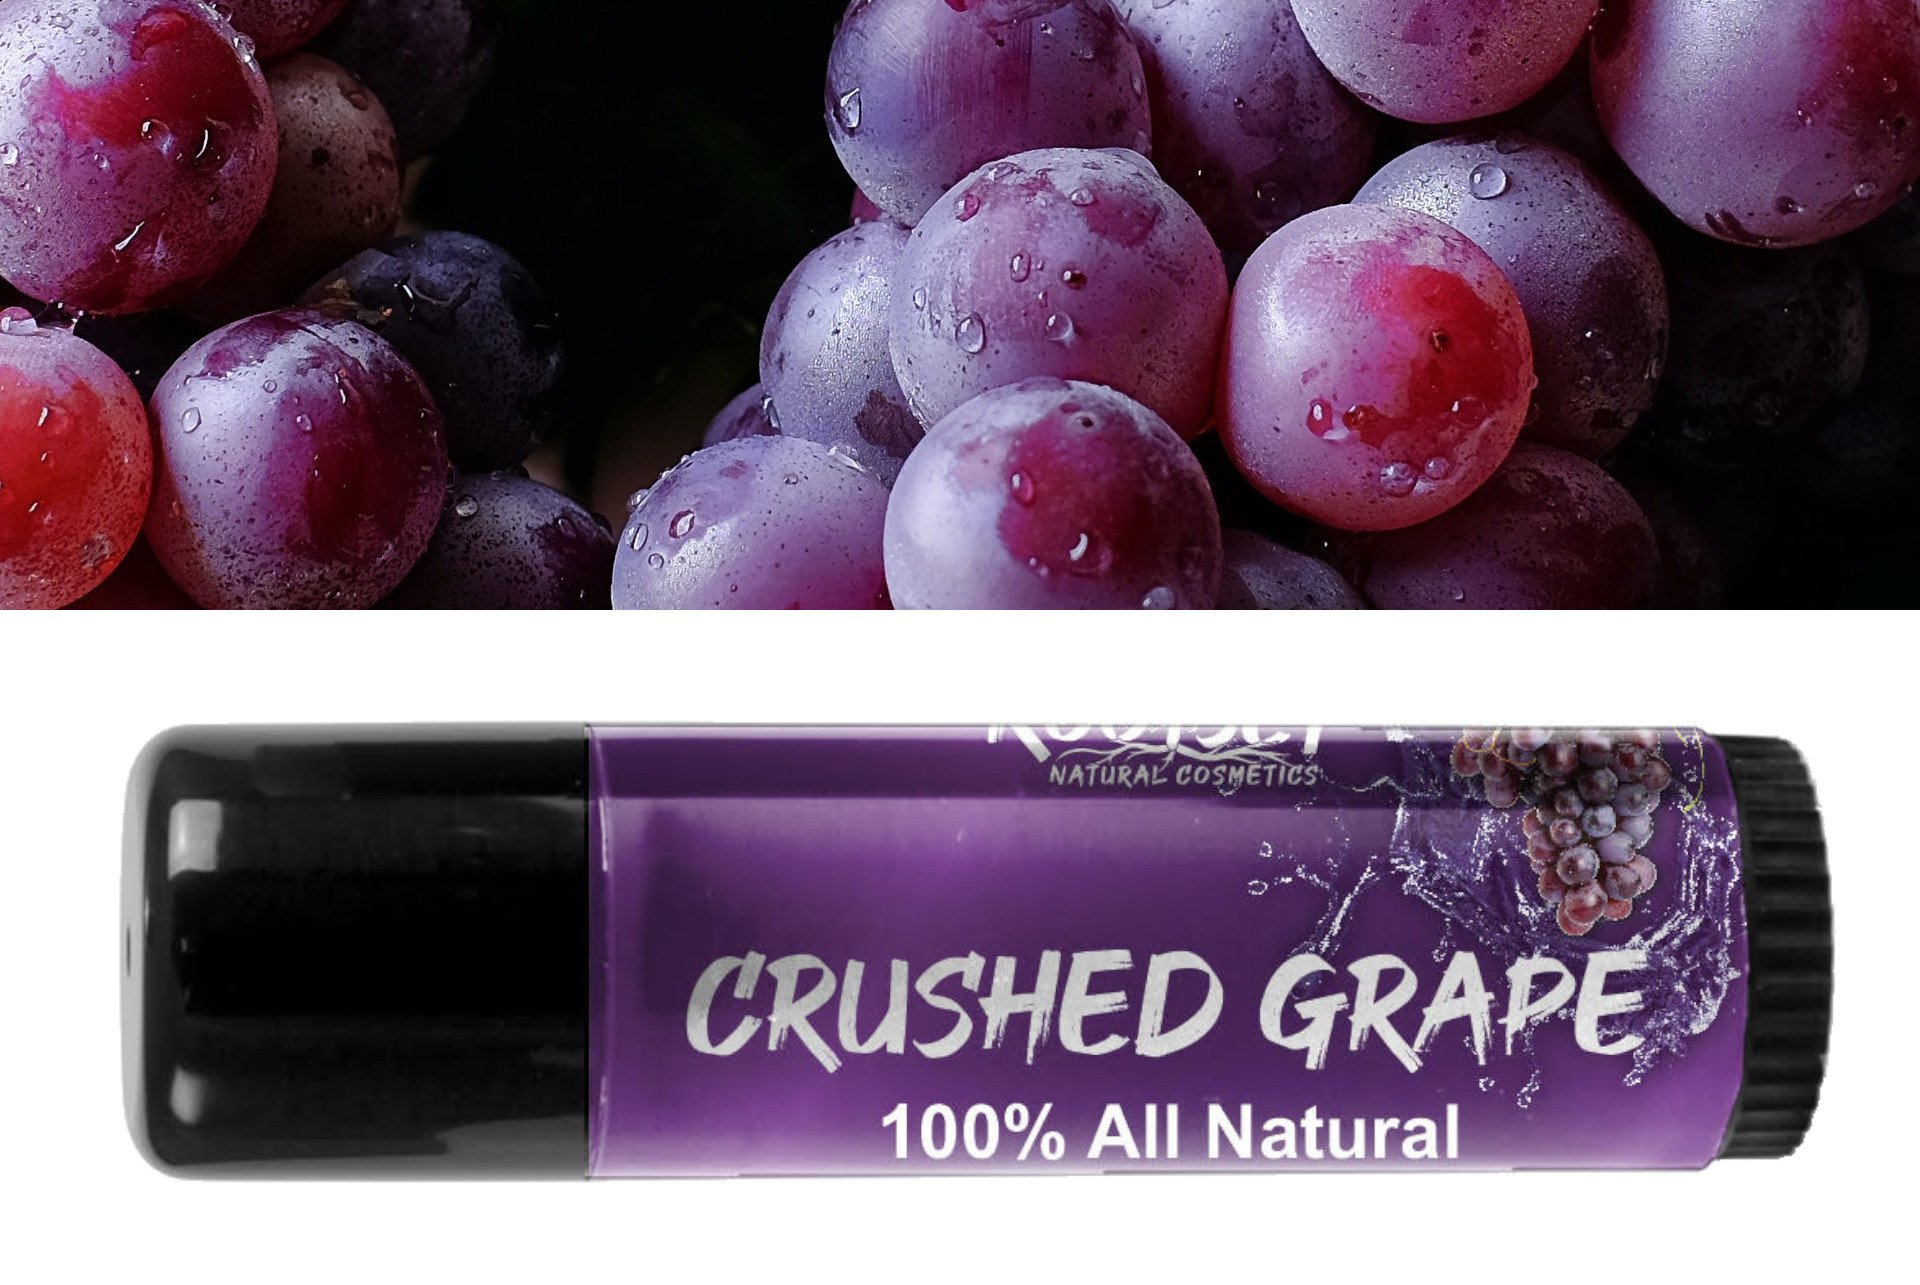 Crushed Grape Jumbo 100% All Natural Lip & Body Balm.jpg